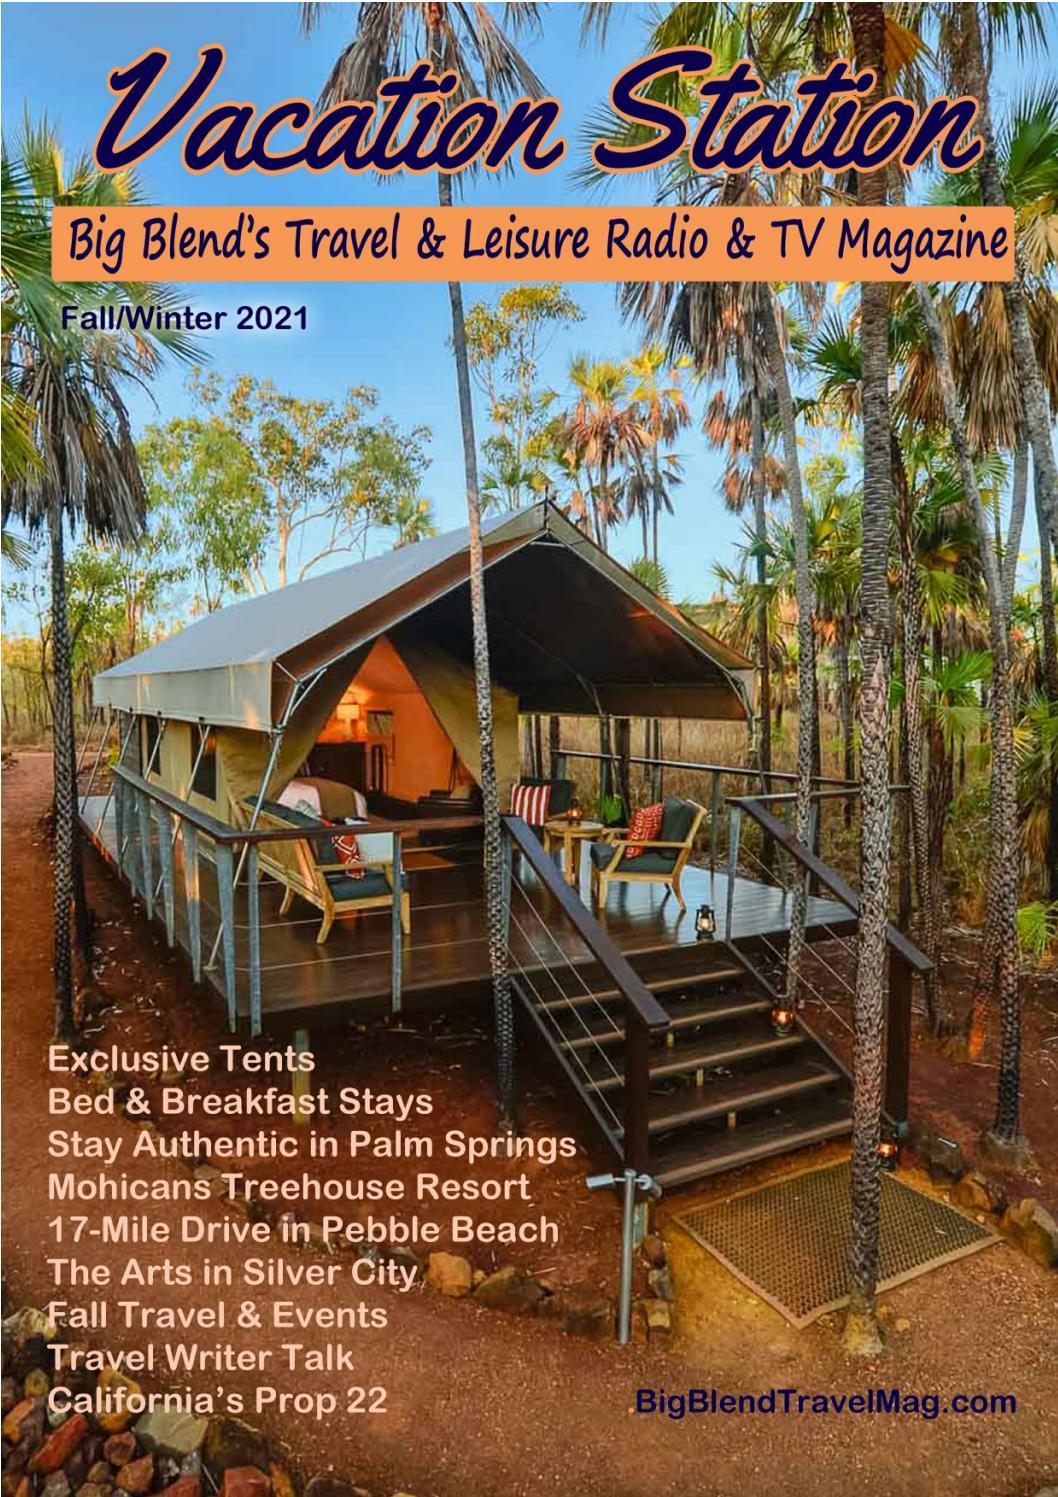 Vacation Station Travel & Leisure Magazine - Fall/Winter 2021